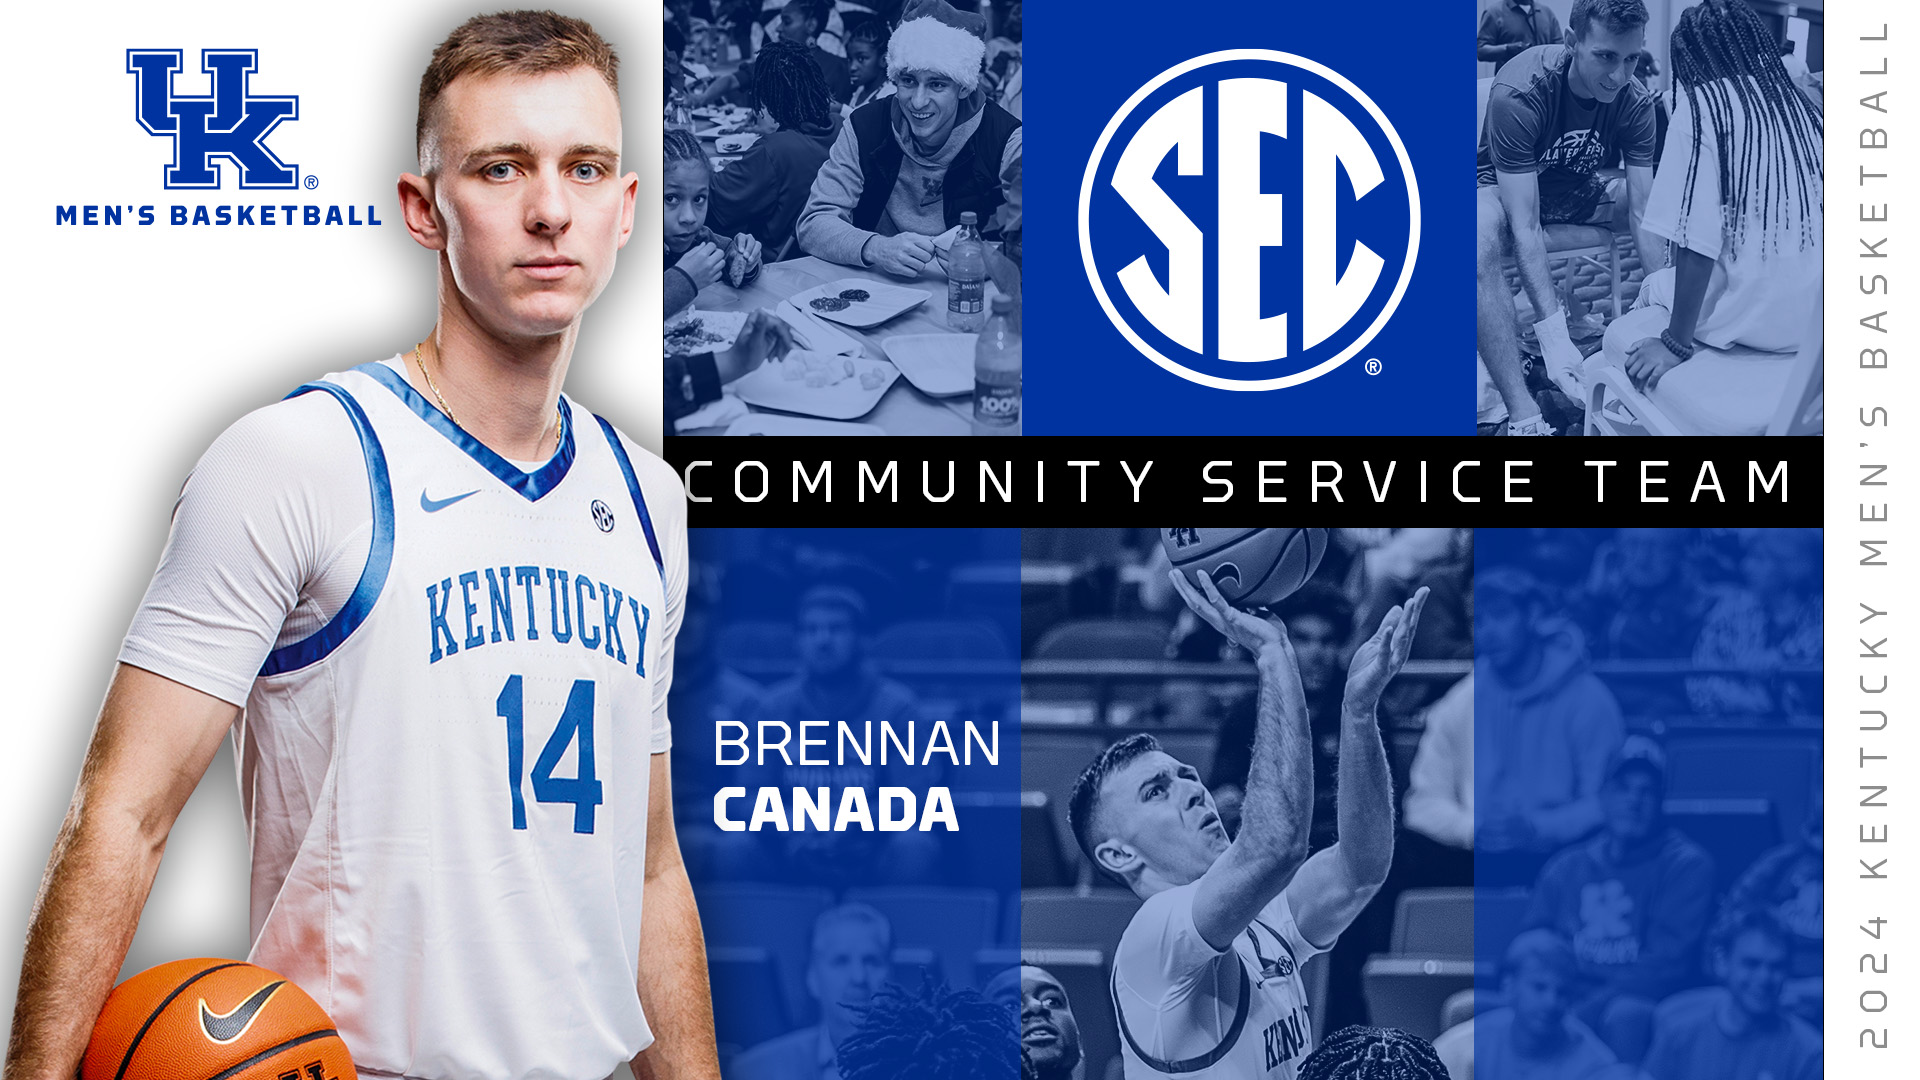 Brennan Canada Represents UK on SEC Community Service Team